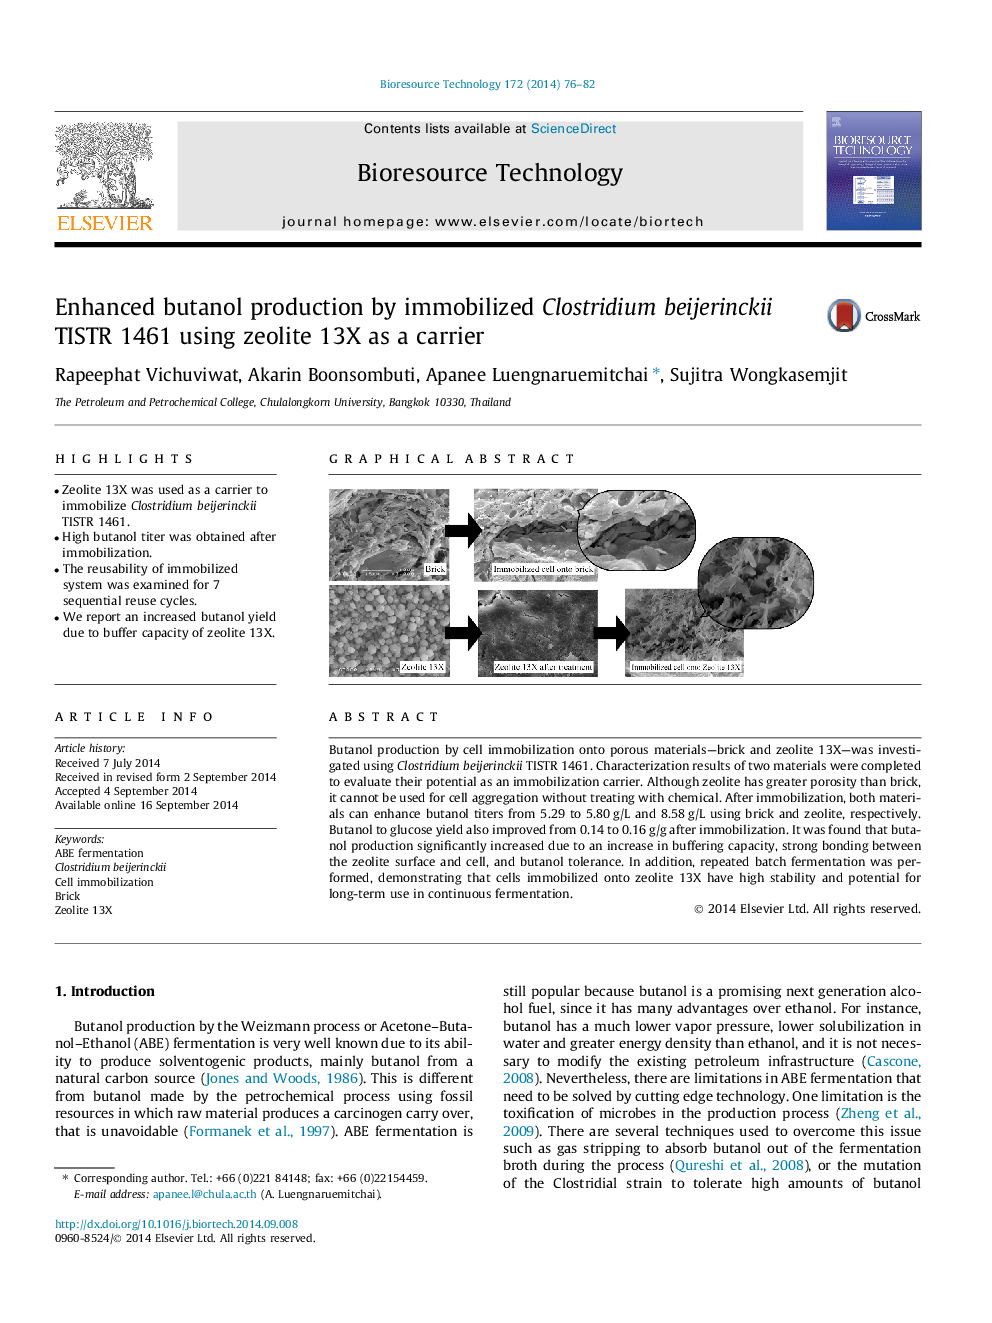 Enhanced butanol production by immobilized Clostridium beijerinckii TISTR 1461 using zeolite 13X as a carrier